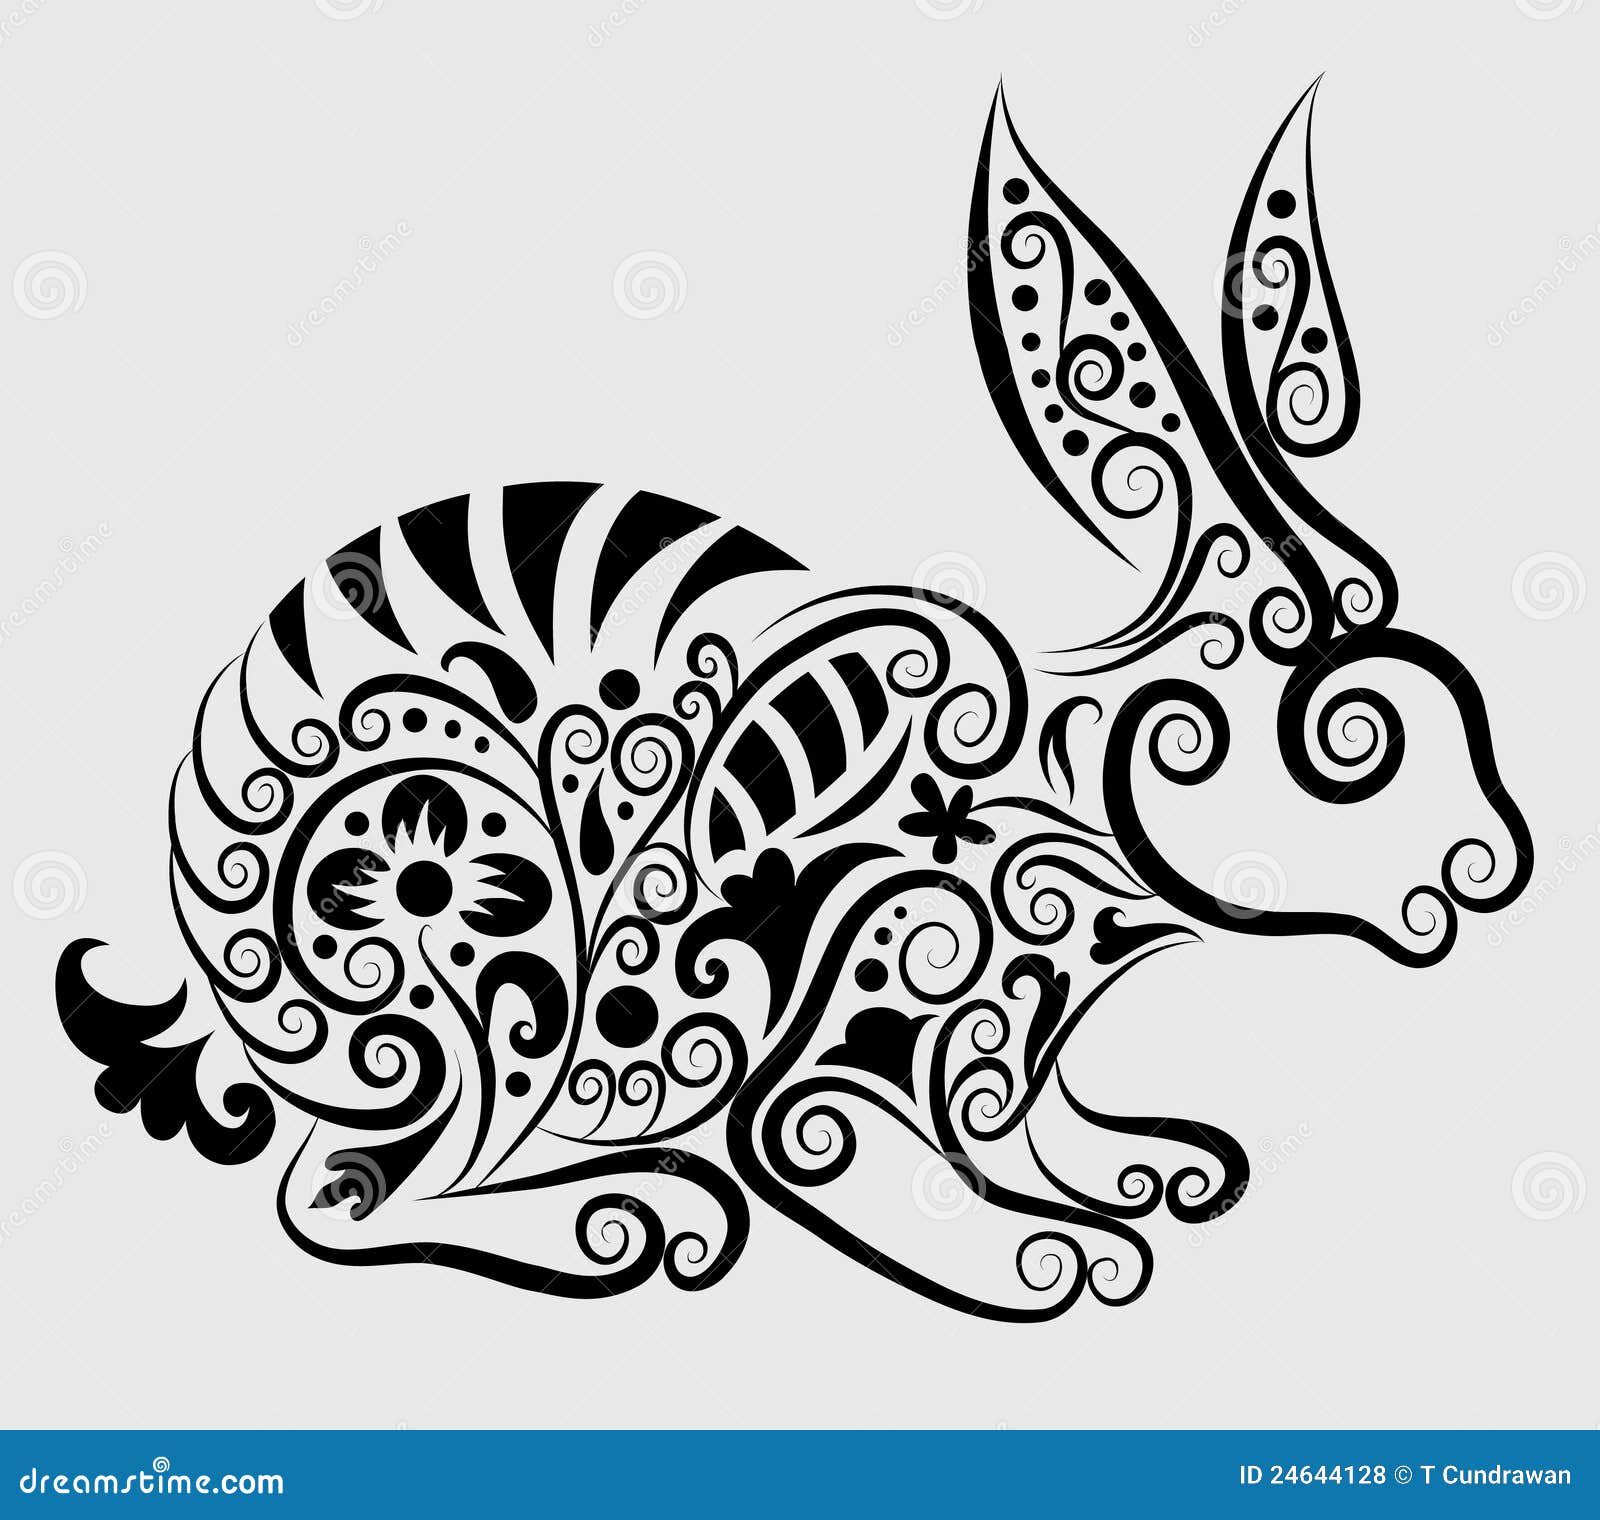 Decorative Rabbit Royalty Free Stock Photos - Image: 24644128